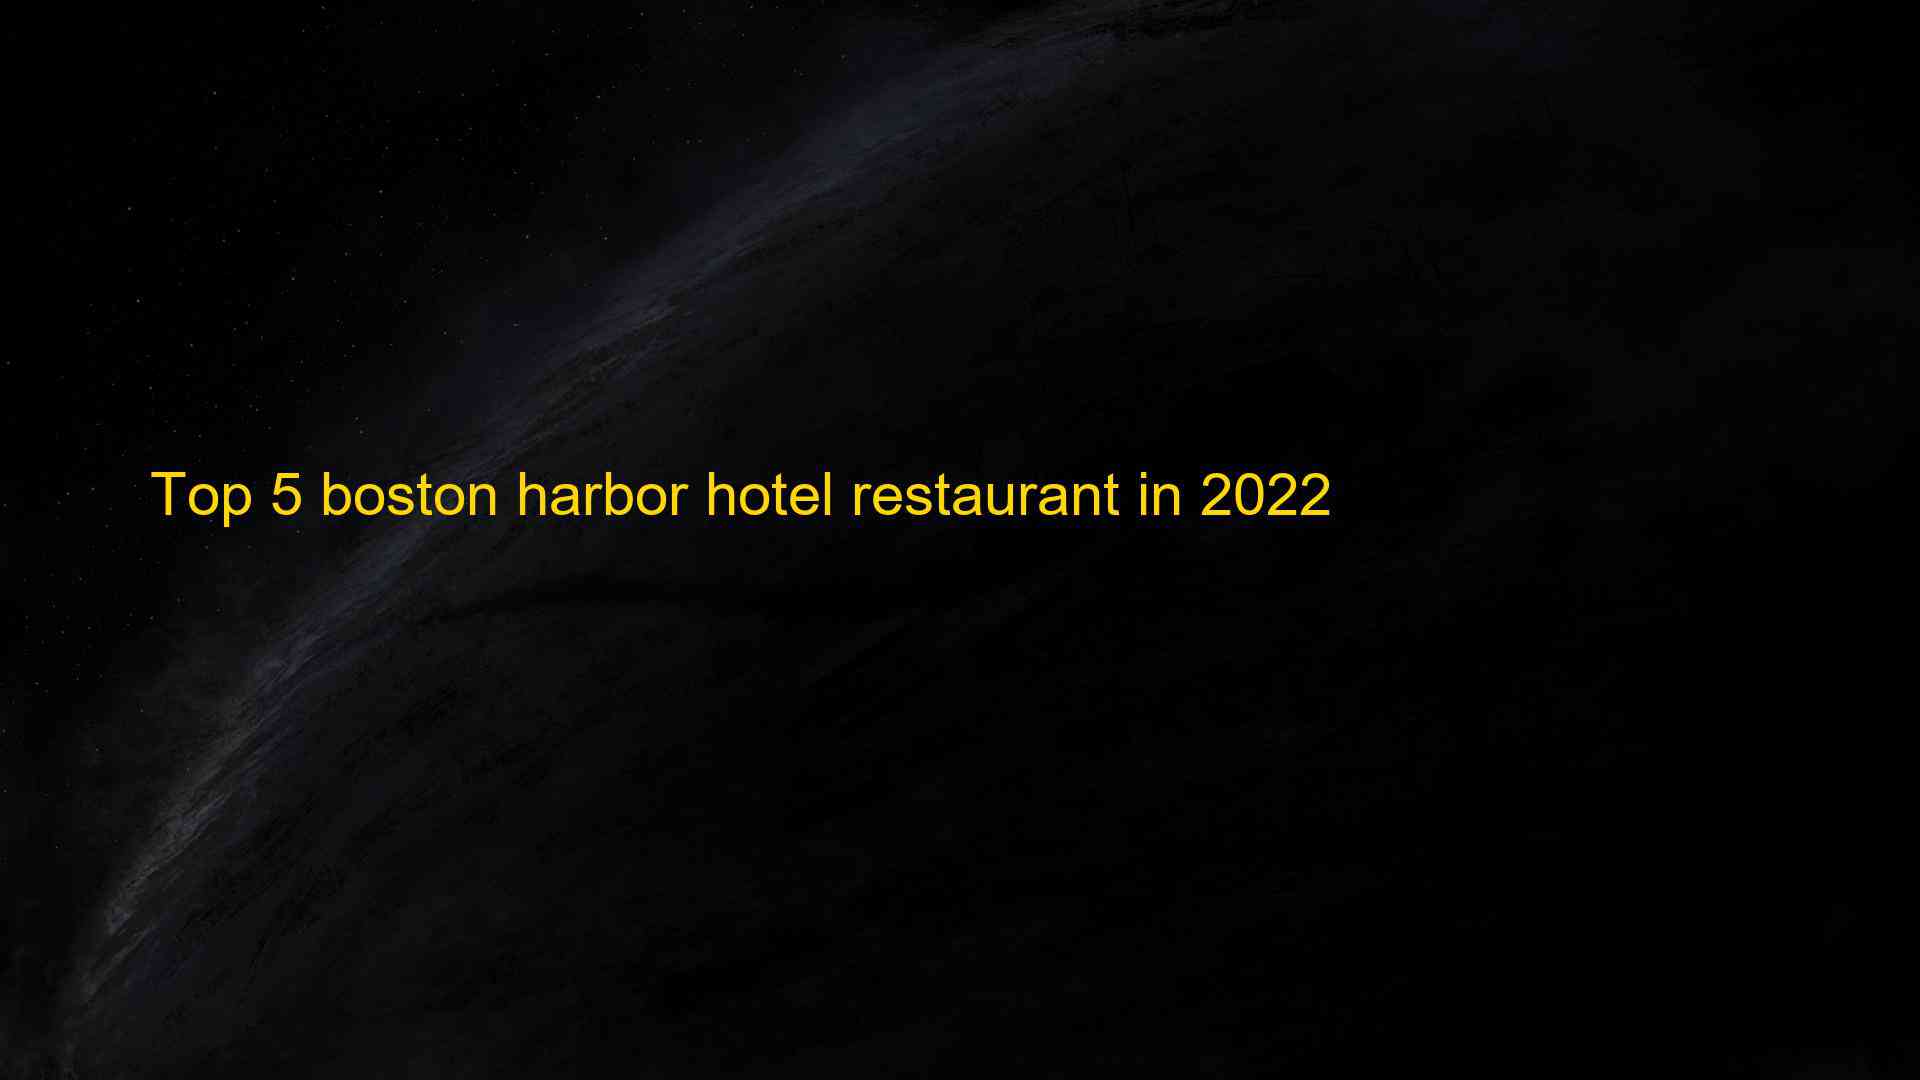 Top 5 boston harbor hotel restaurant in 2022 1663518396